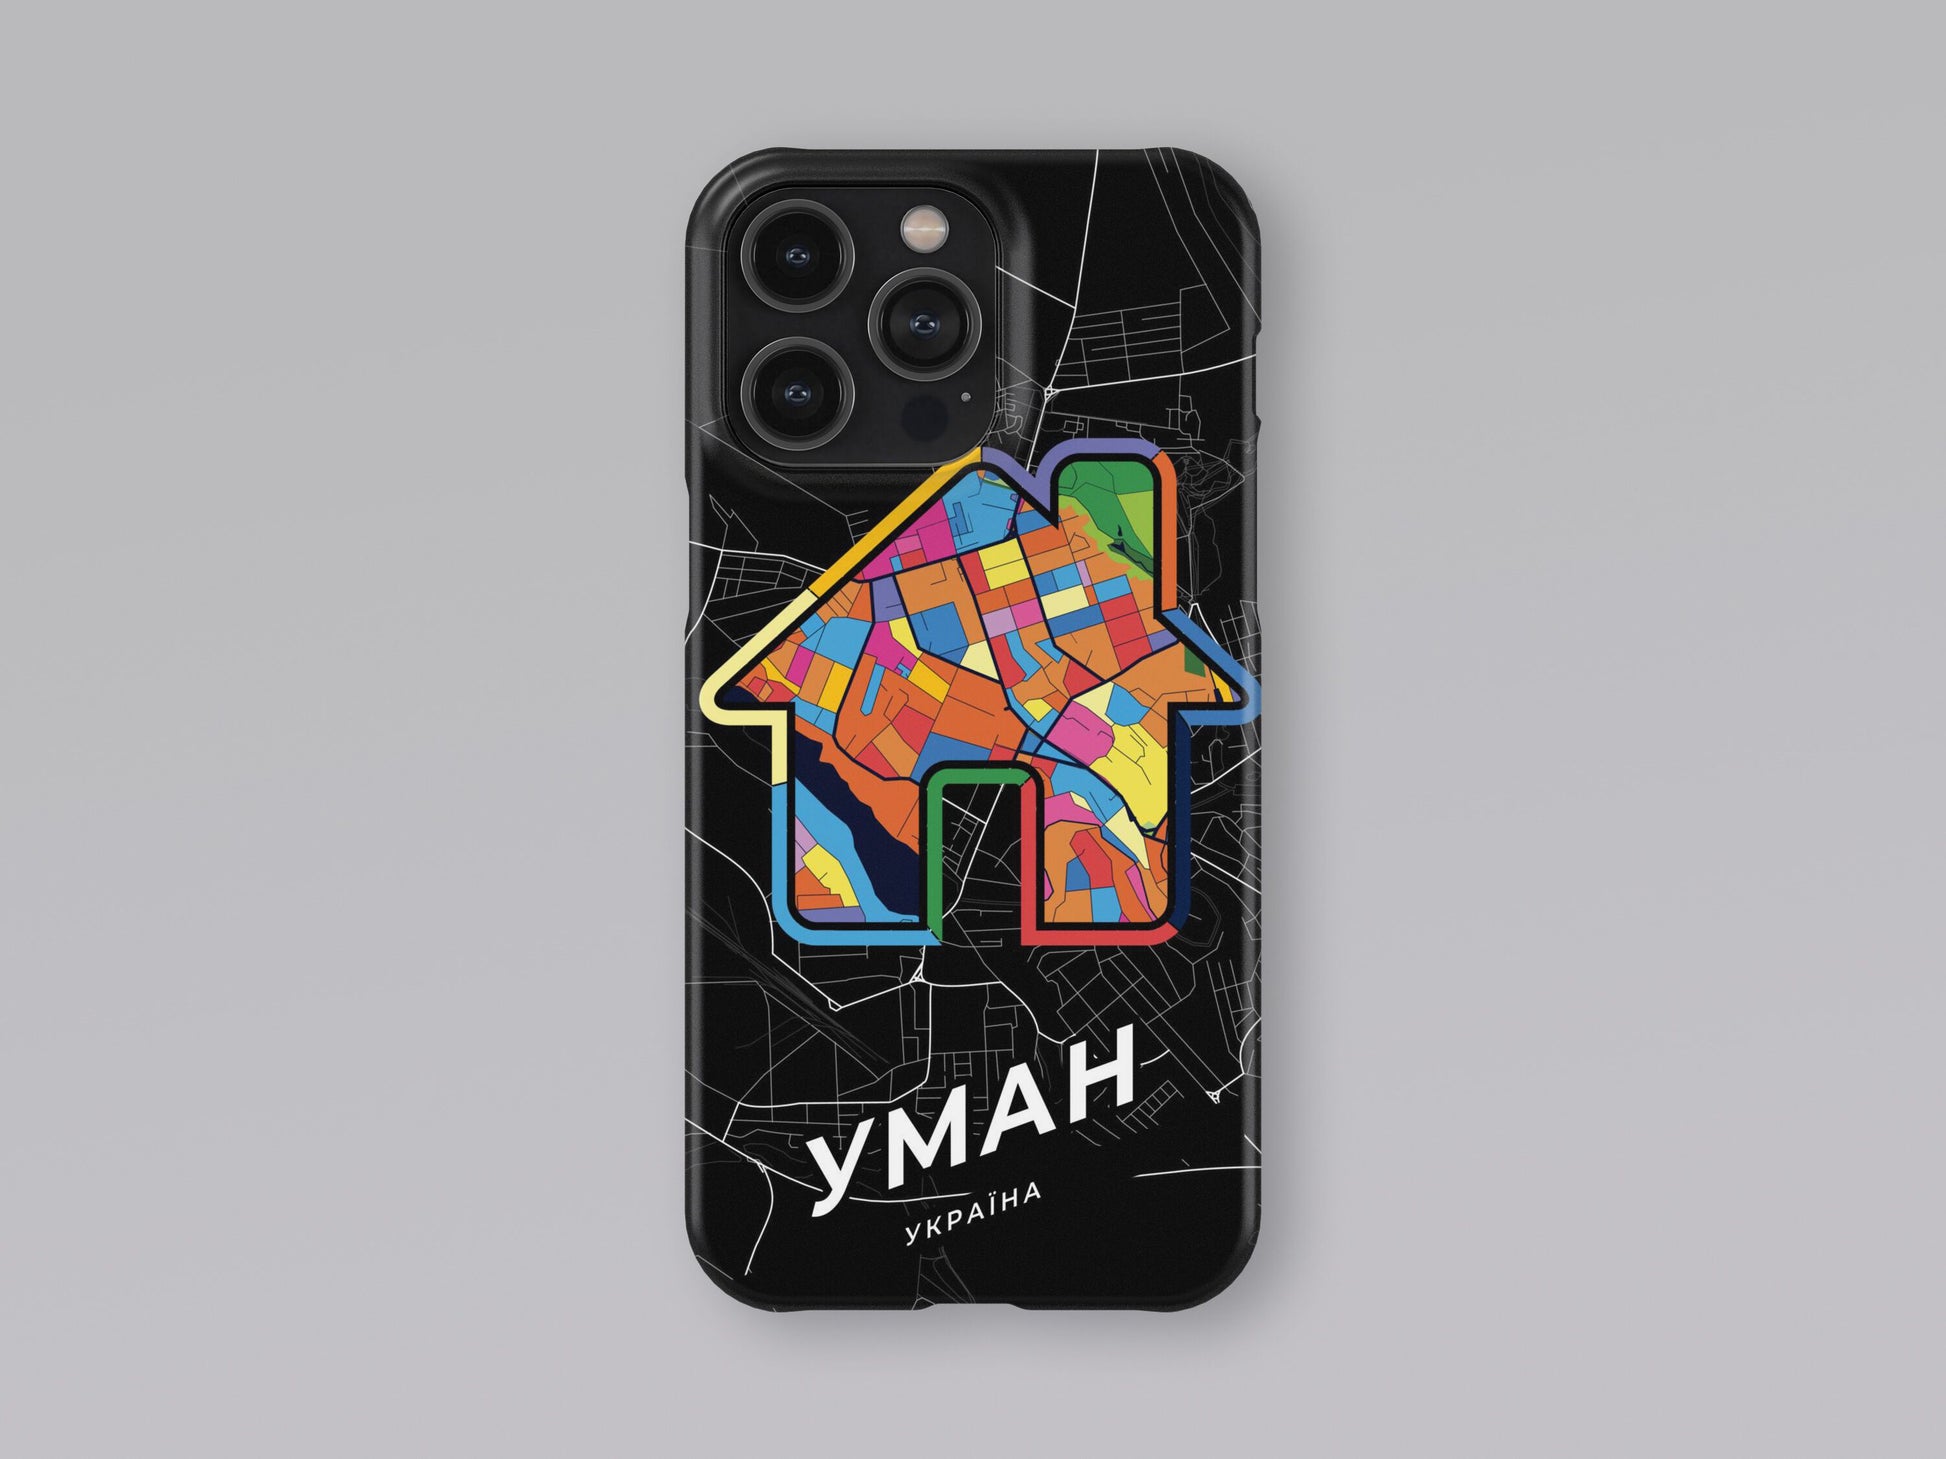 Uman Ukraine slim phone case with colorful icon 3